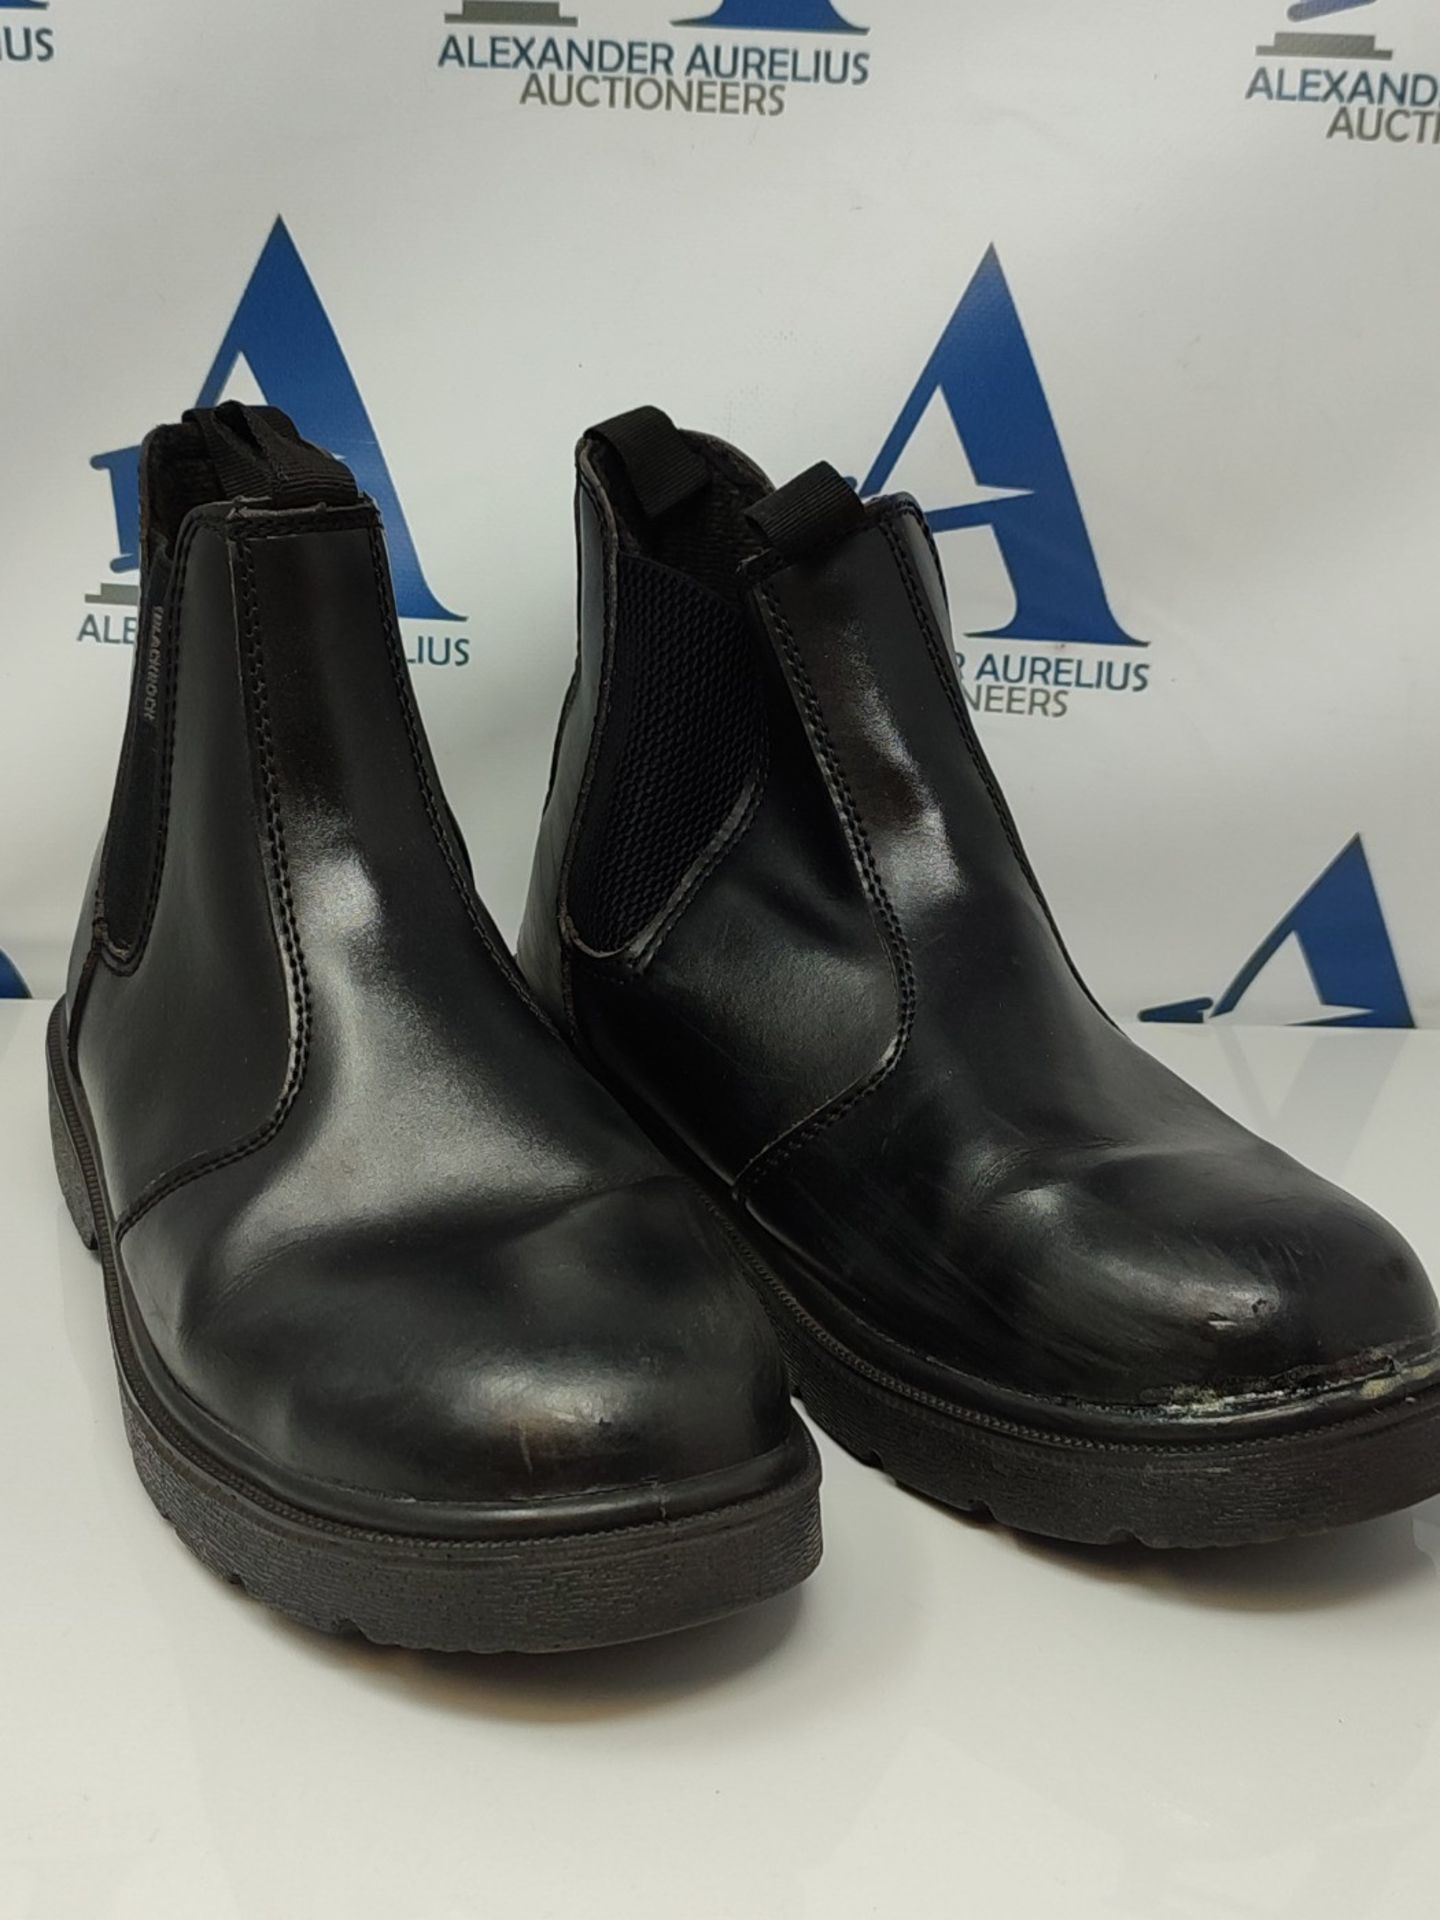 Blackrock Black Safety Dealer Boots, Steel Toe Cap Boots Womens Mens Work Boots, Leath - Image 2 of 2